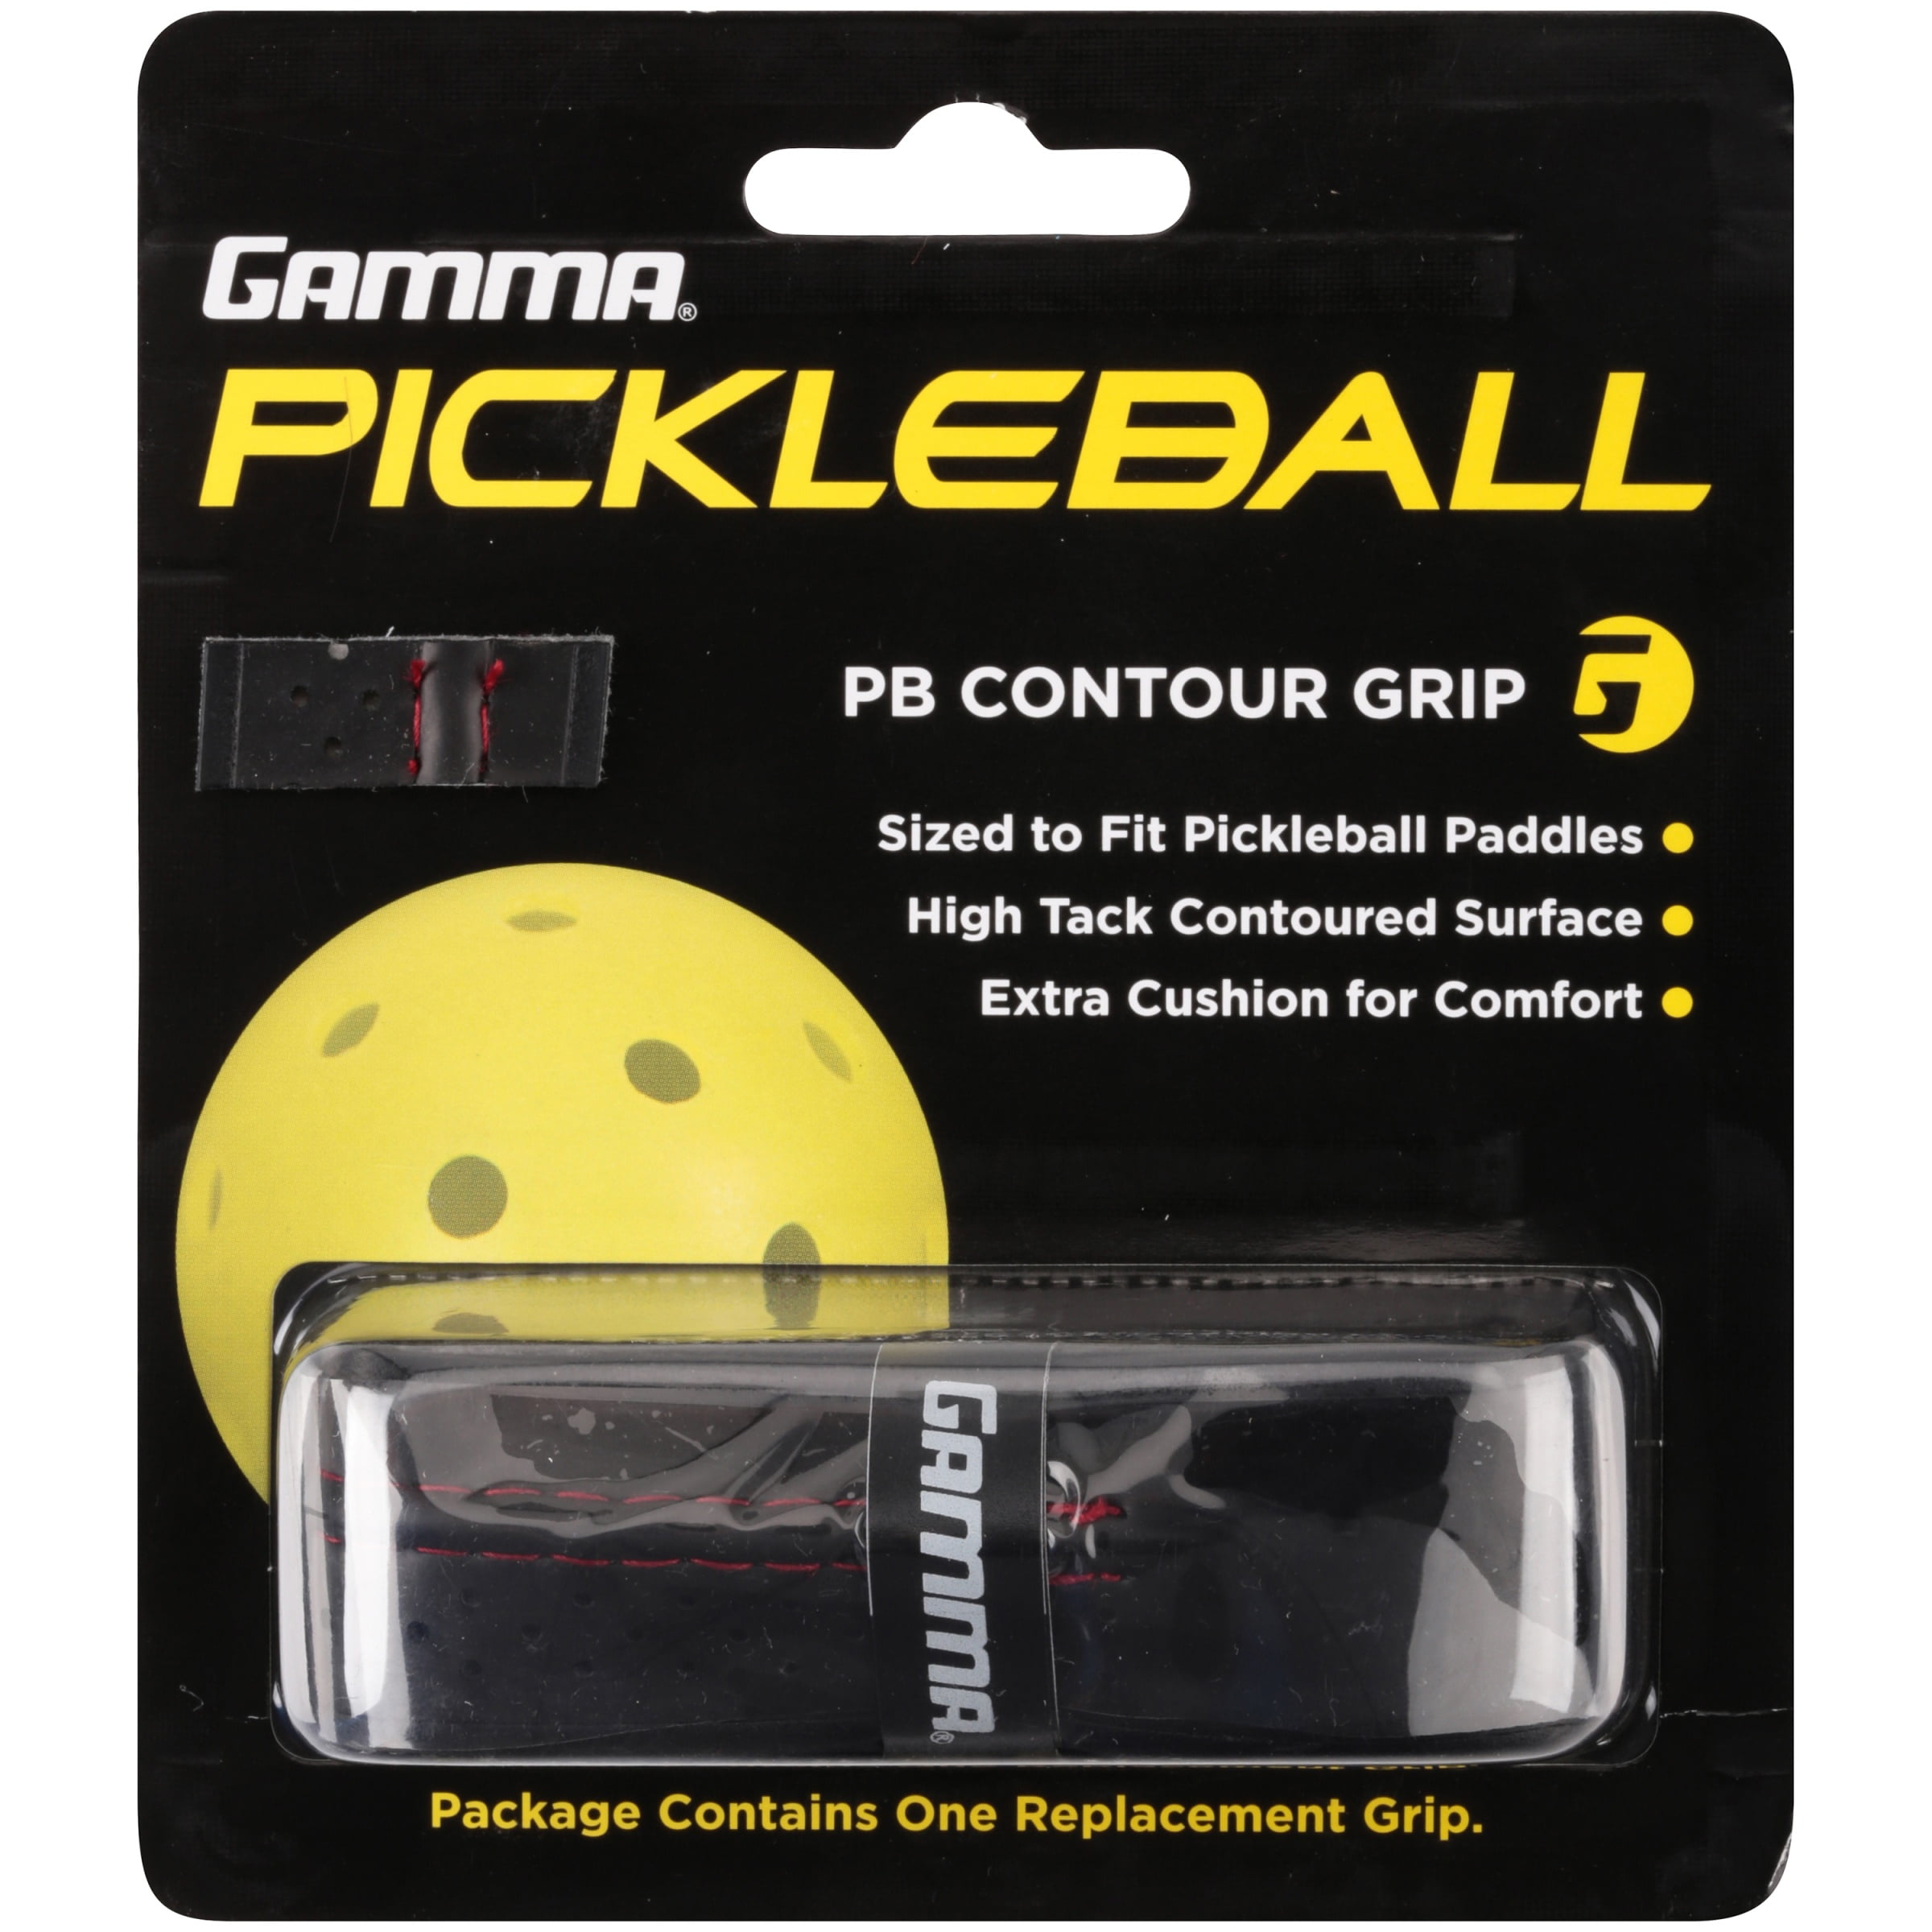 NEW Gamma Tacky Towel Grip Enhancer Tennis Pickleball Golf Baseball NEW IN  PACK